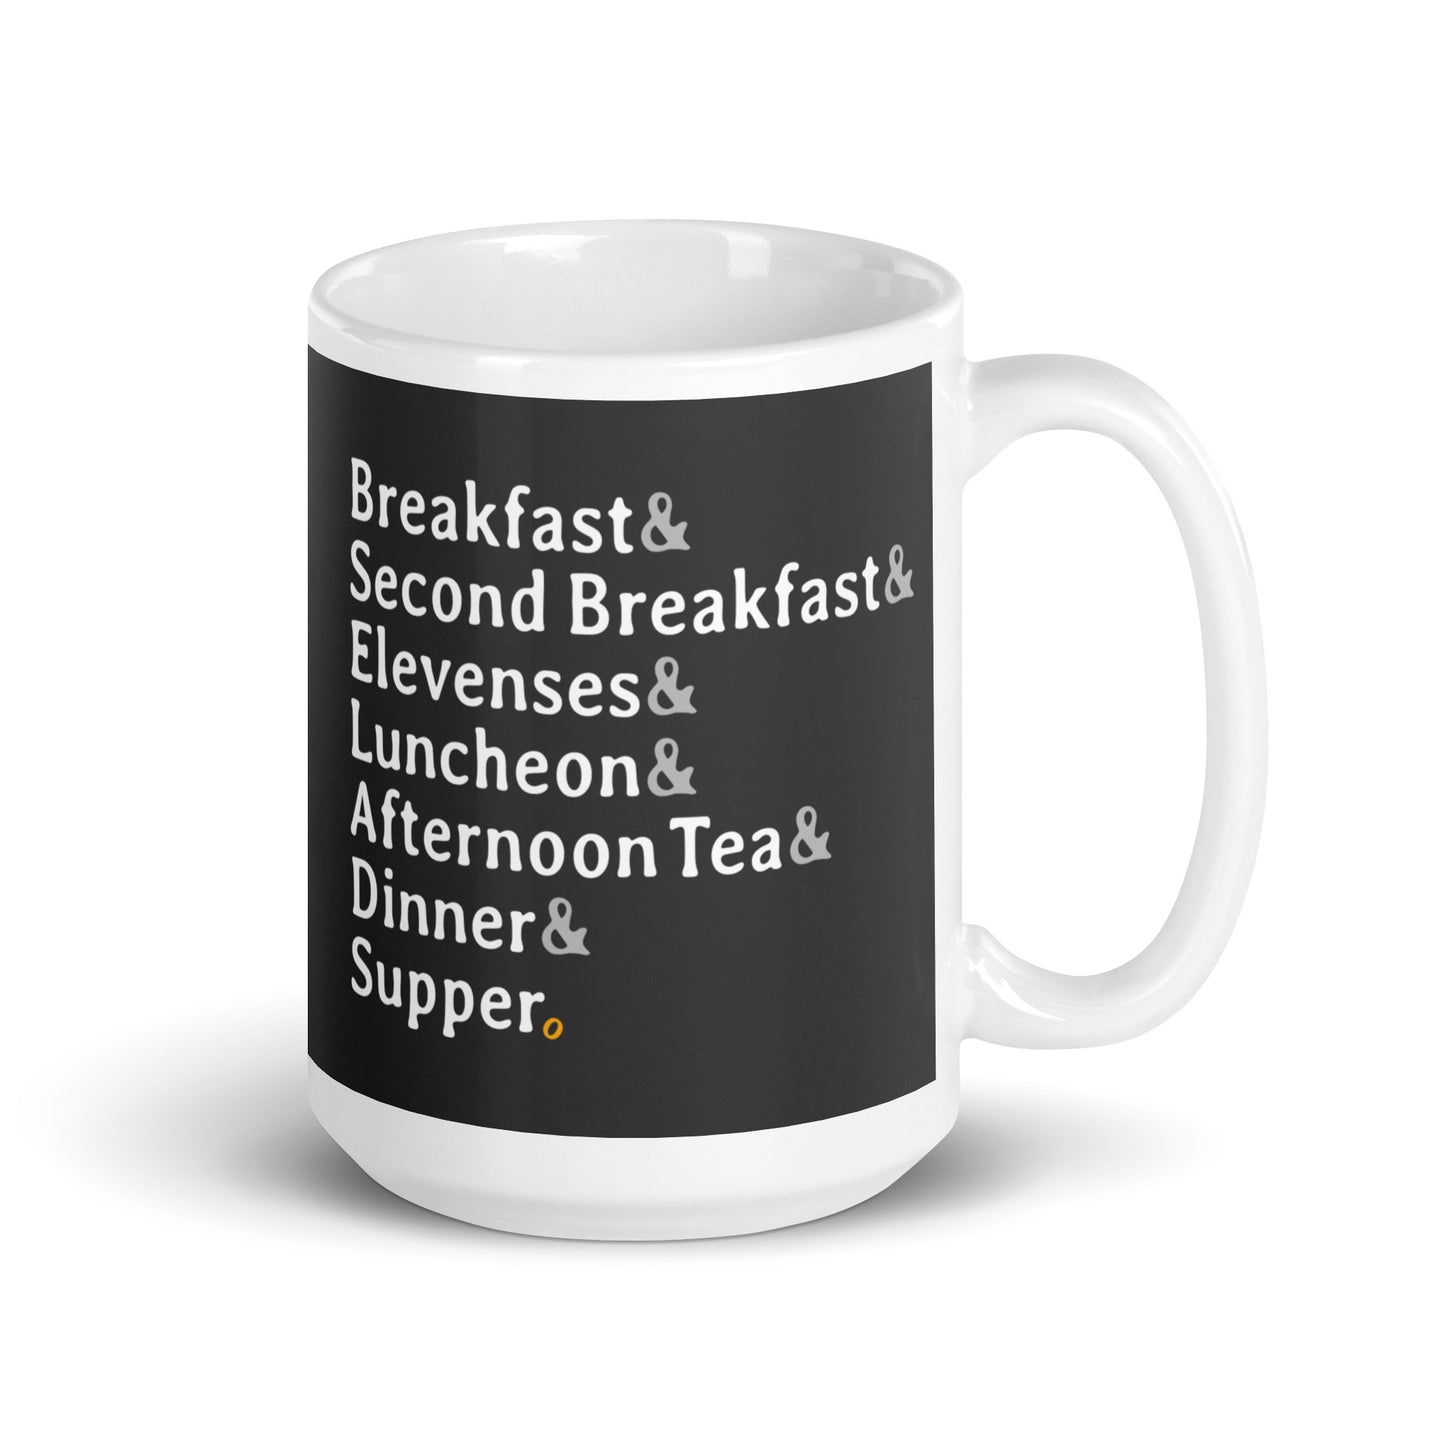 Typical Daily Meals Mug